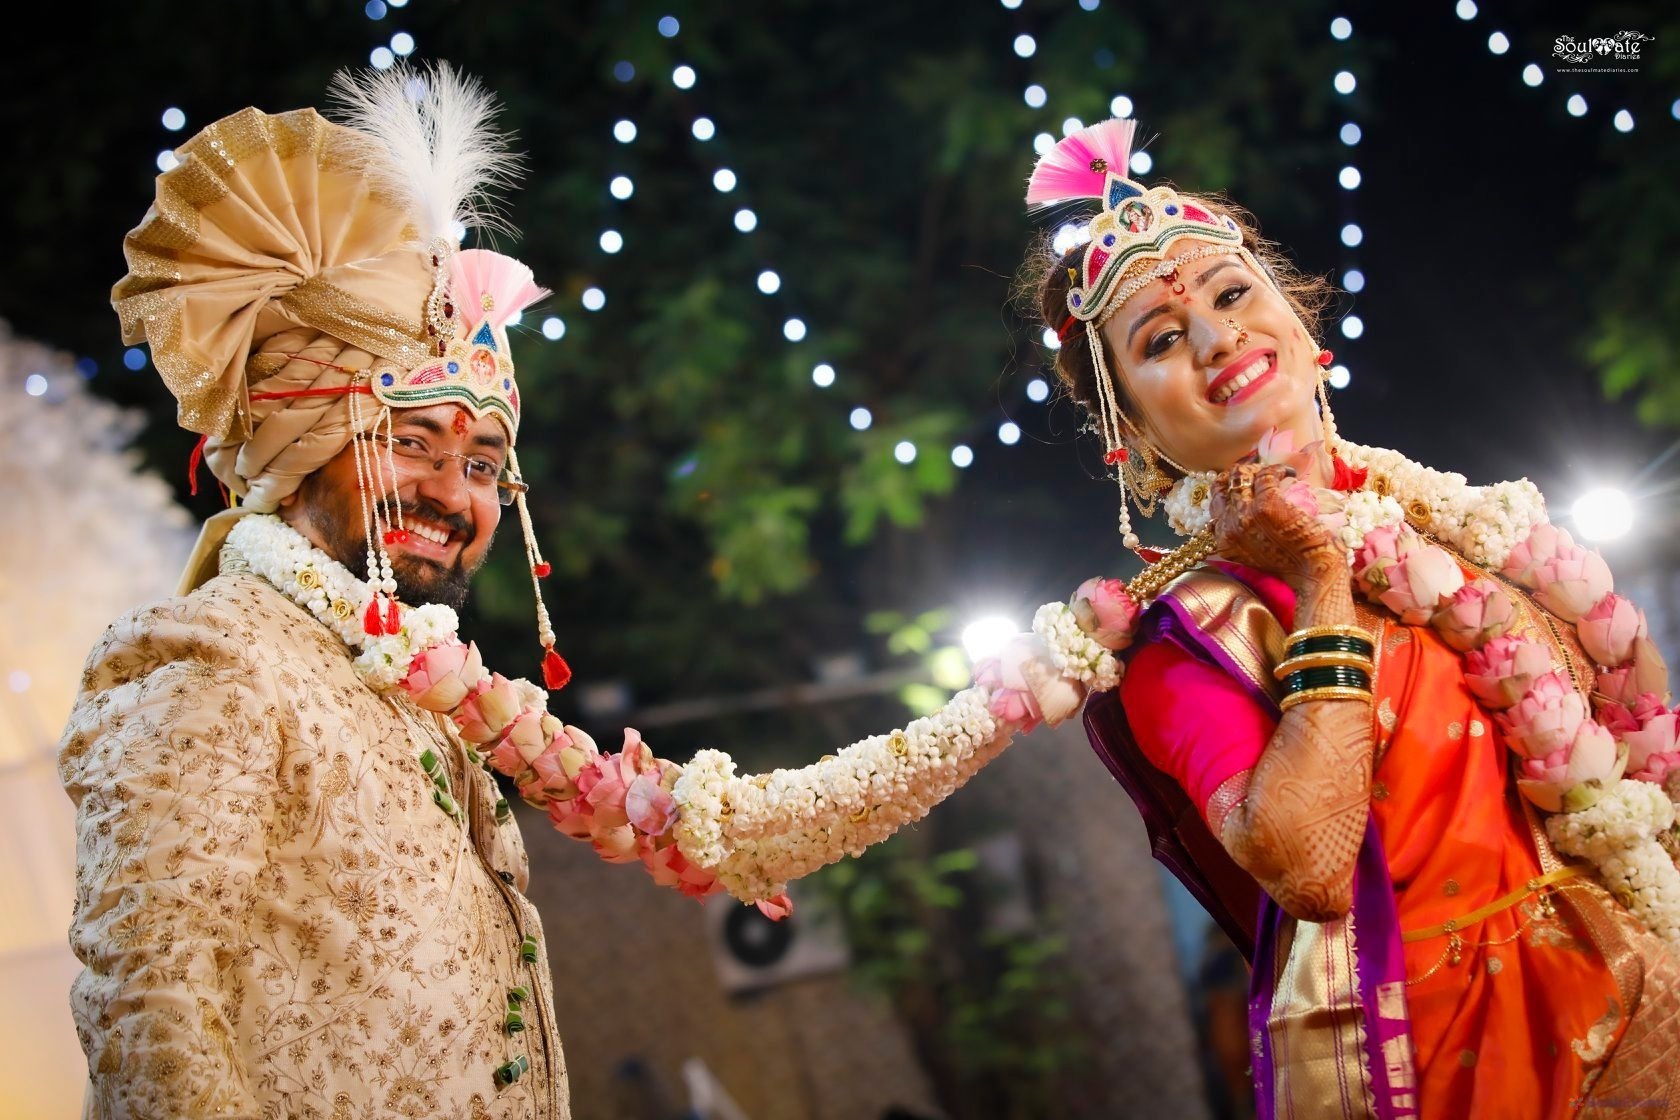 The Soulmate Diaries Wedding Photographer, Mumbai